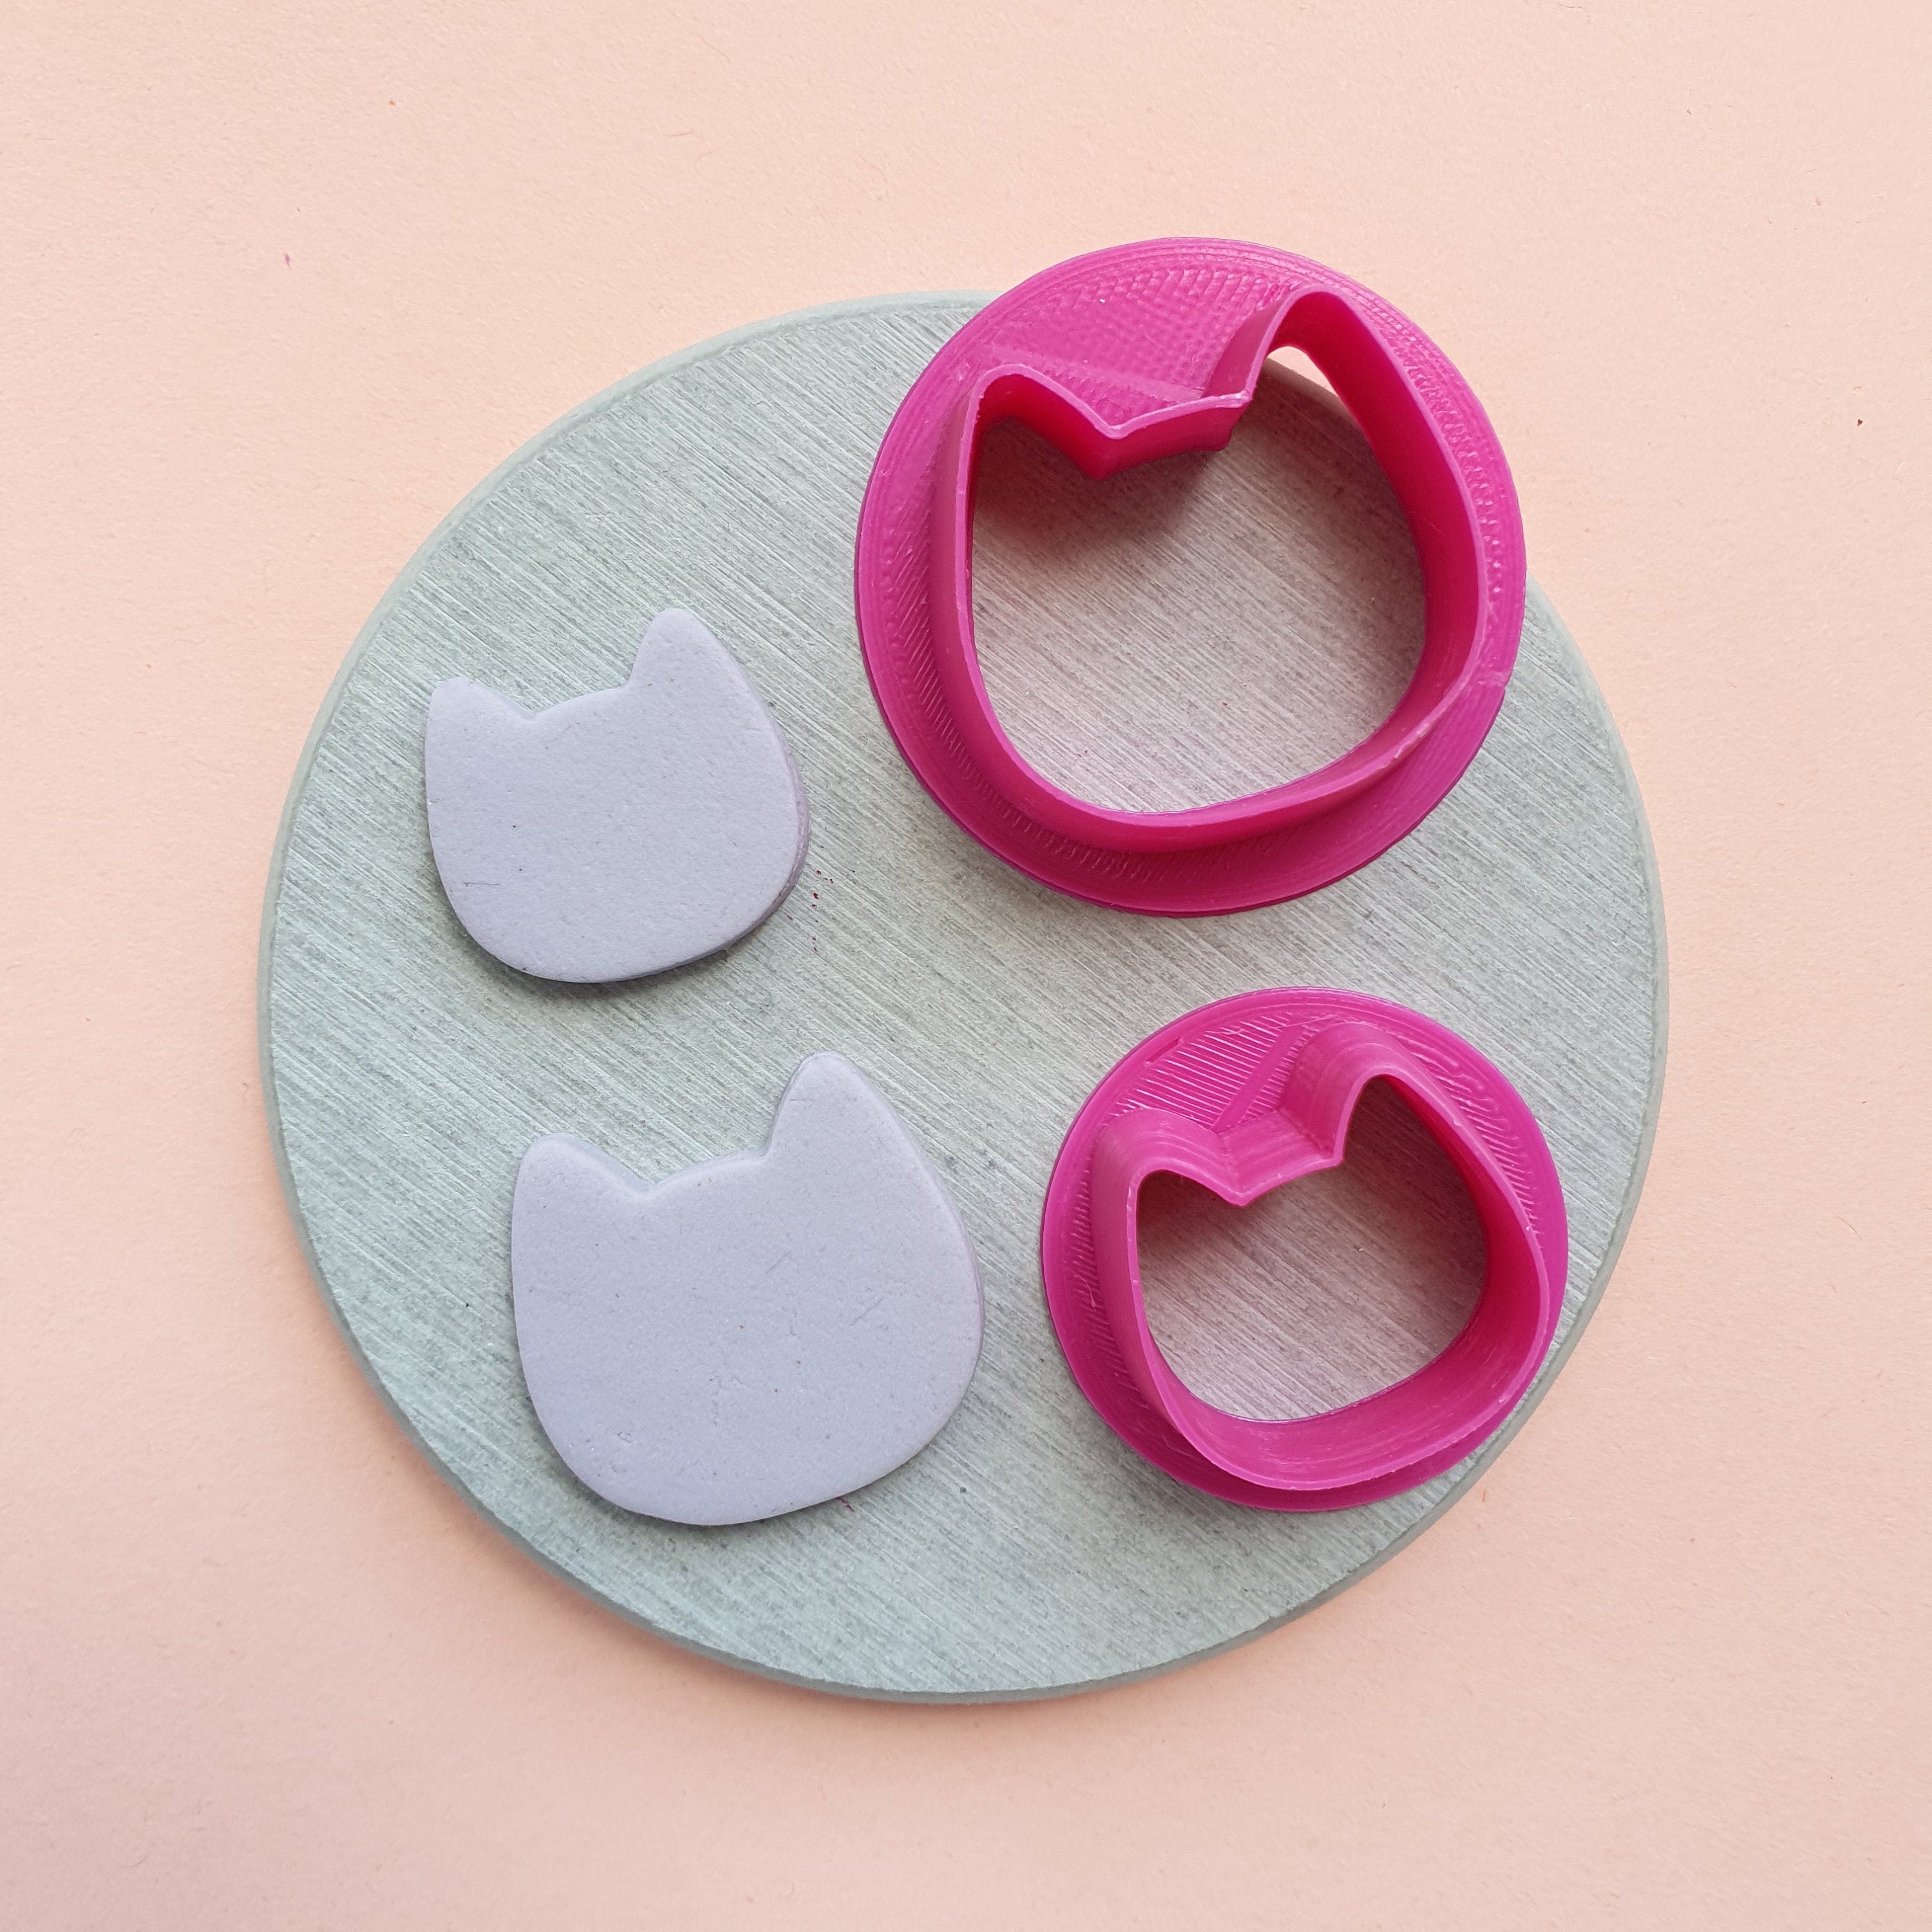 Polymer clay cutter 3D print cutters Jewelry Earrings Cat shape plastic  cutter